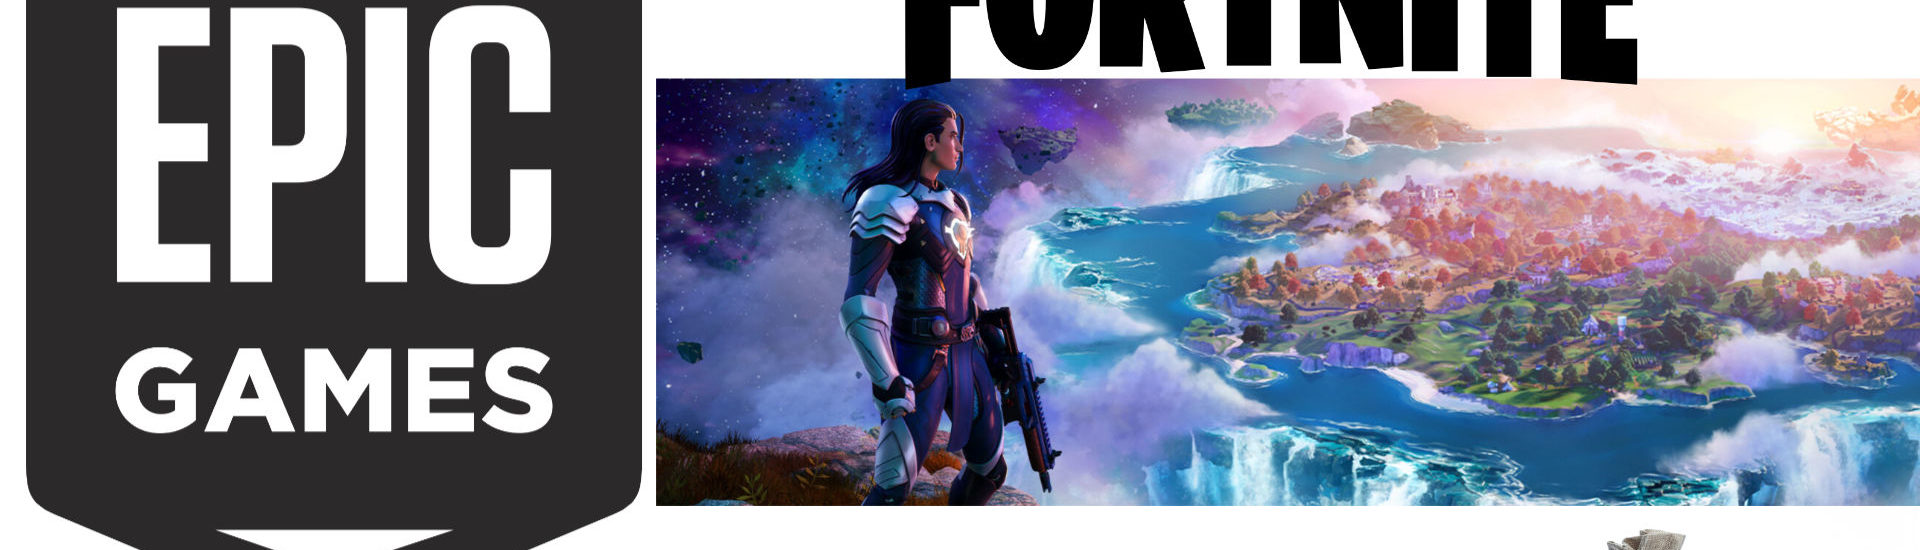 Epic Games: Fortnite kostet den Entwickler 500 Millionen Dollar Bußgeld